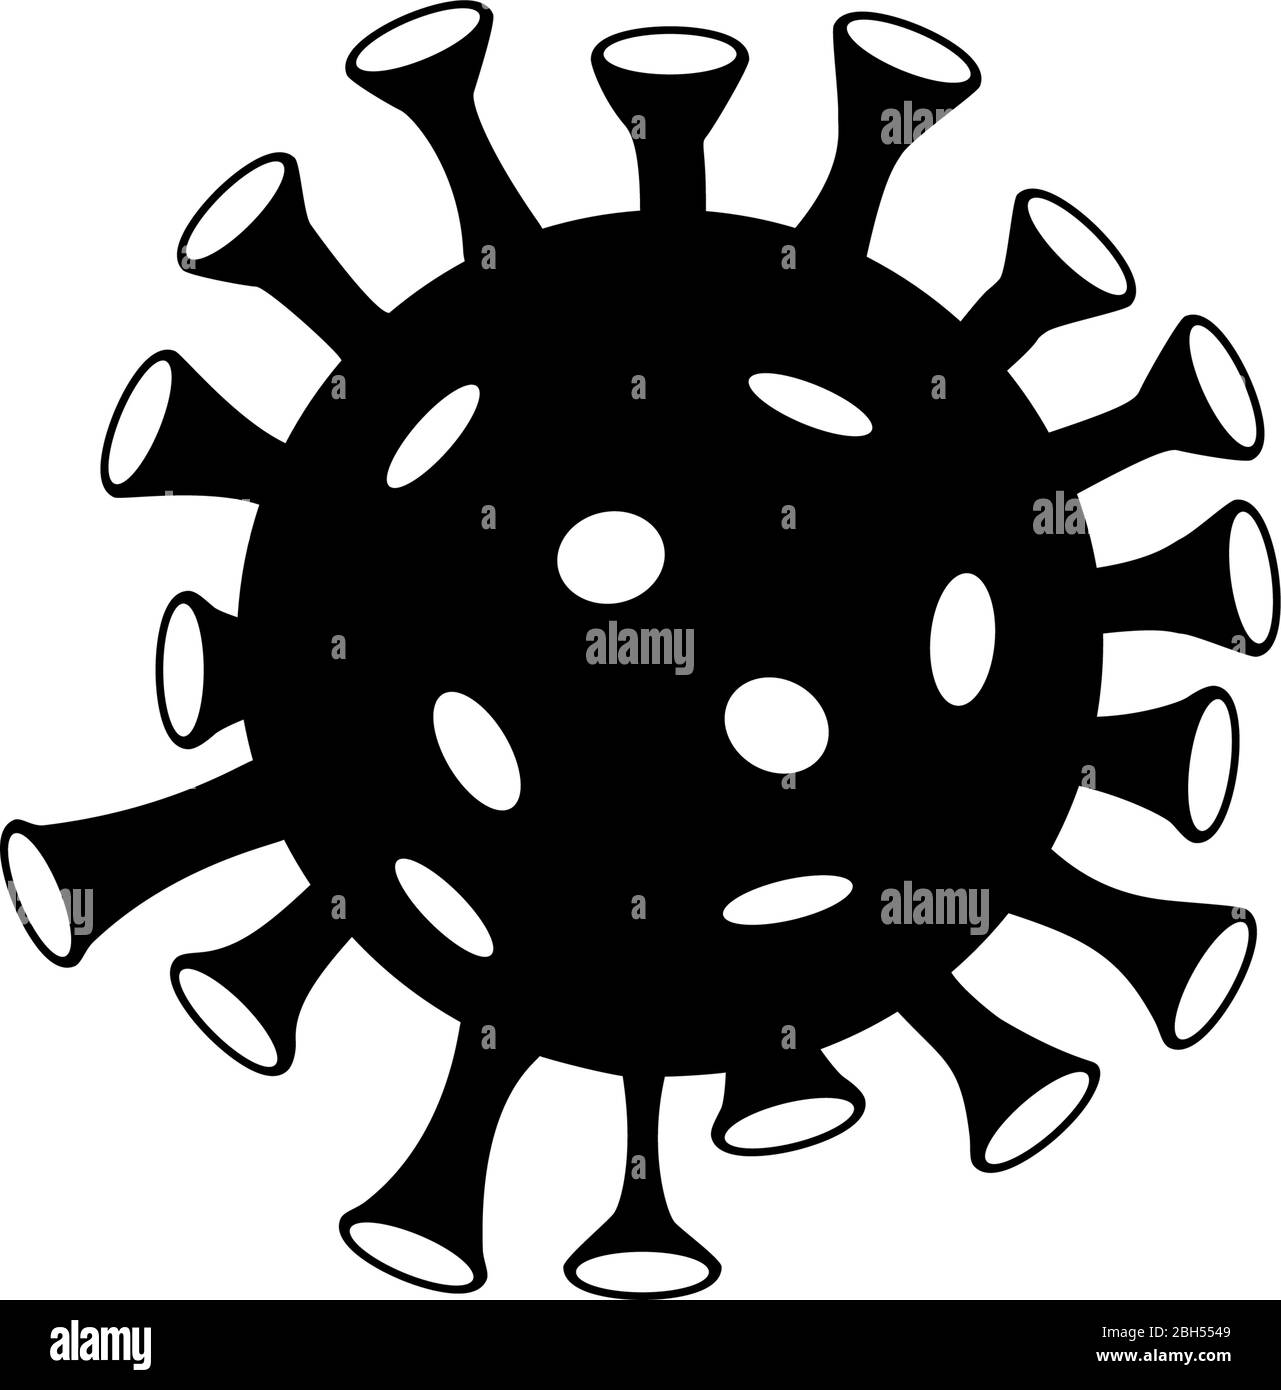 Corona virus vector icon. Covid-19 pandemic pathogen germ black symbol on white background. Stock Vector